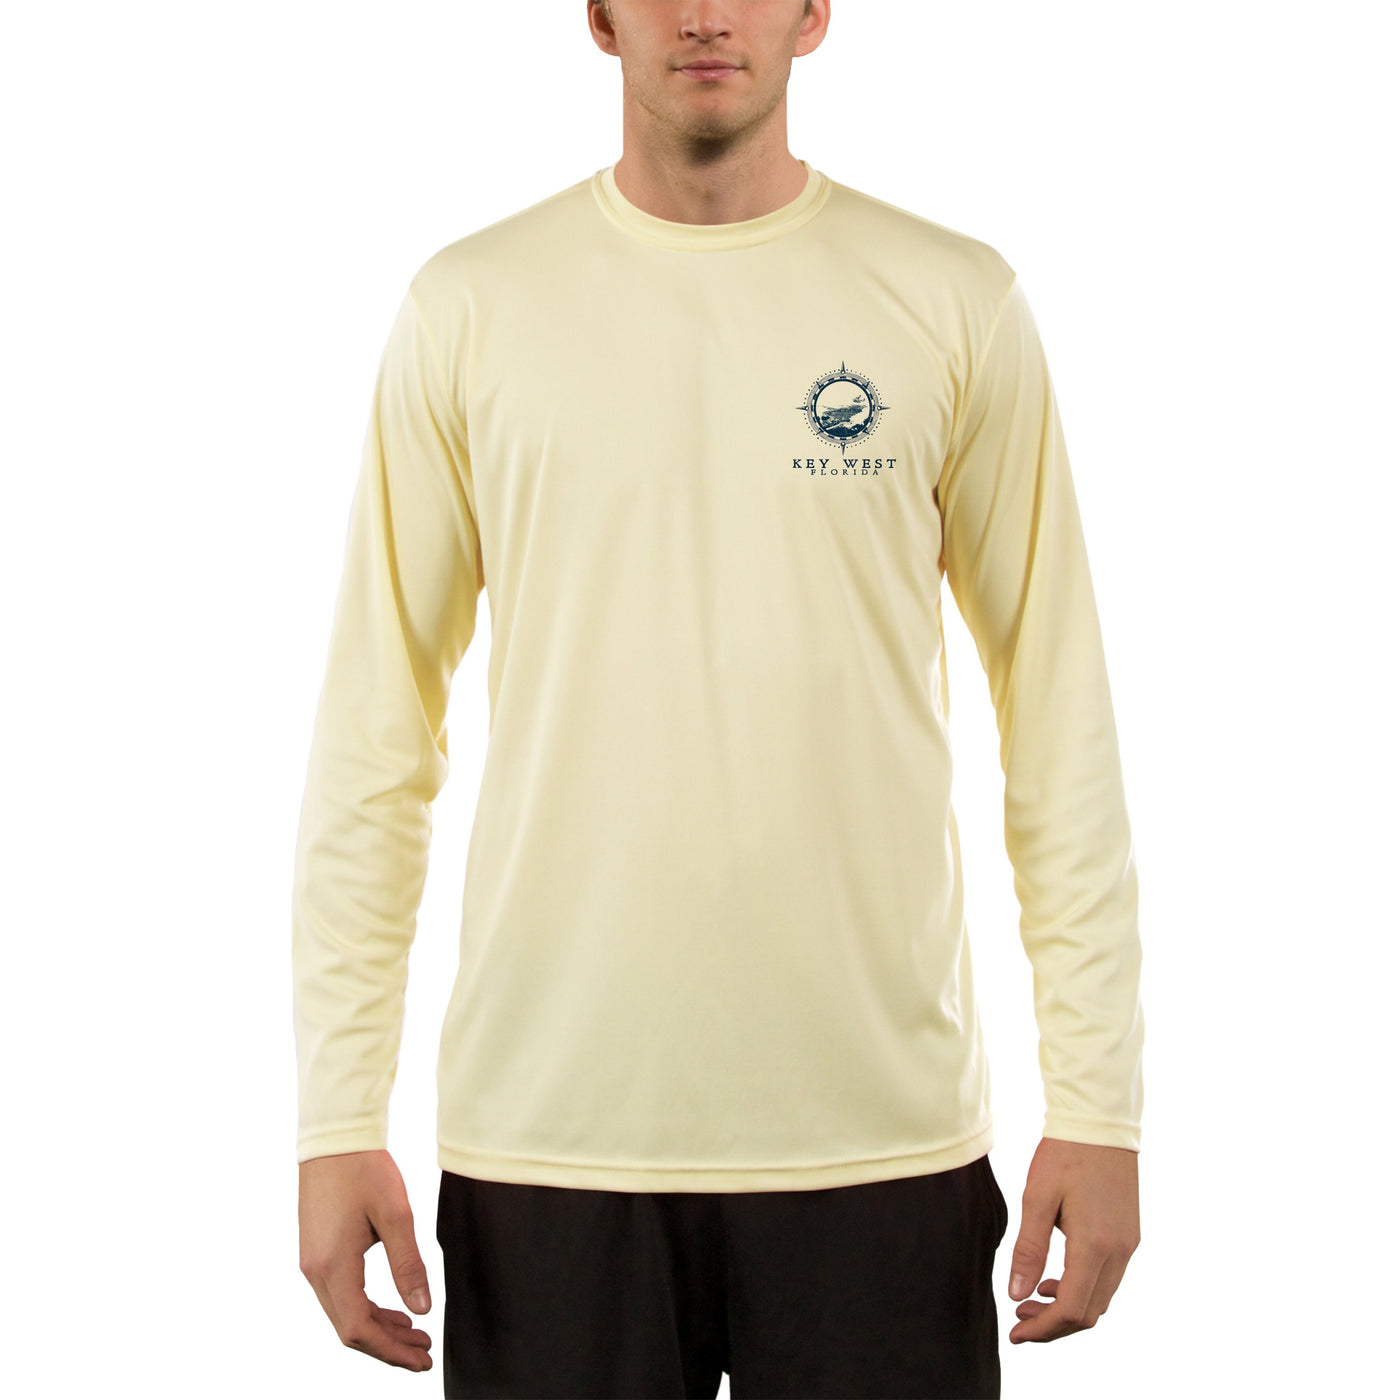 Compass Vintage Key West Men's UPF 50+ Long Sleeve T-Shirt